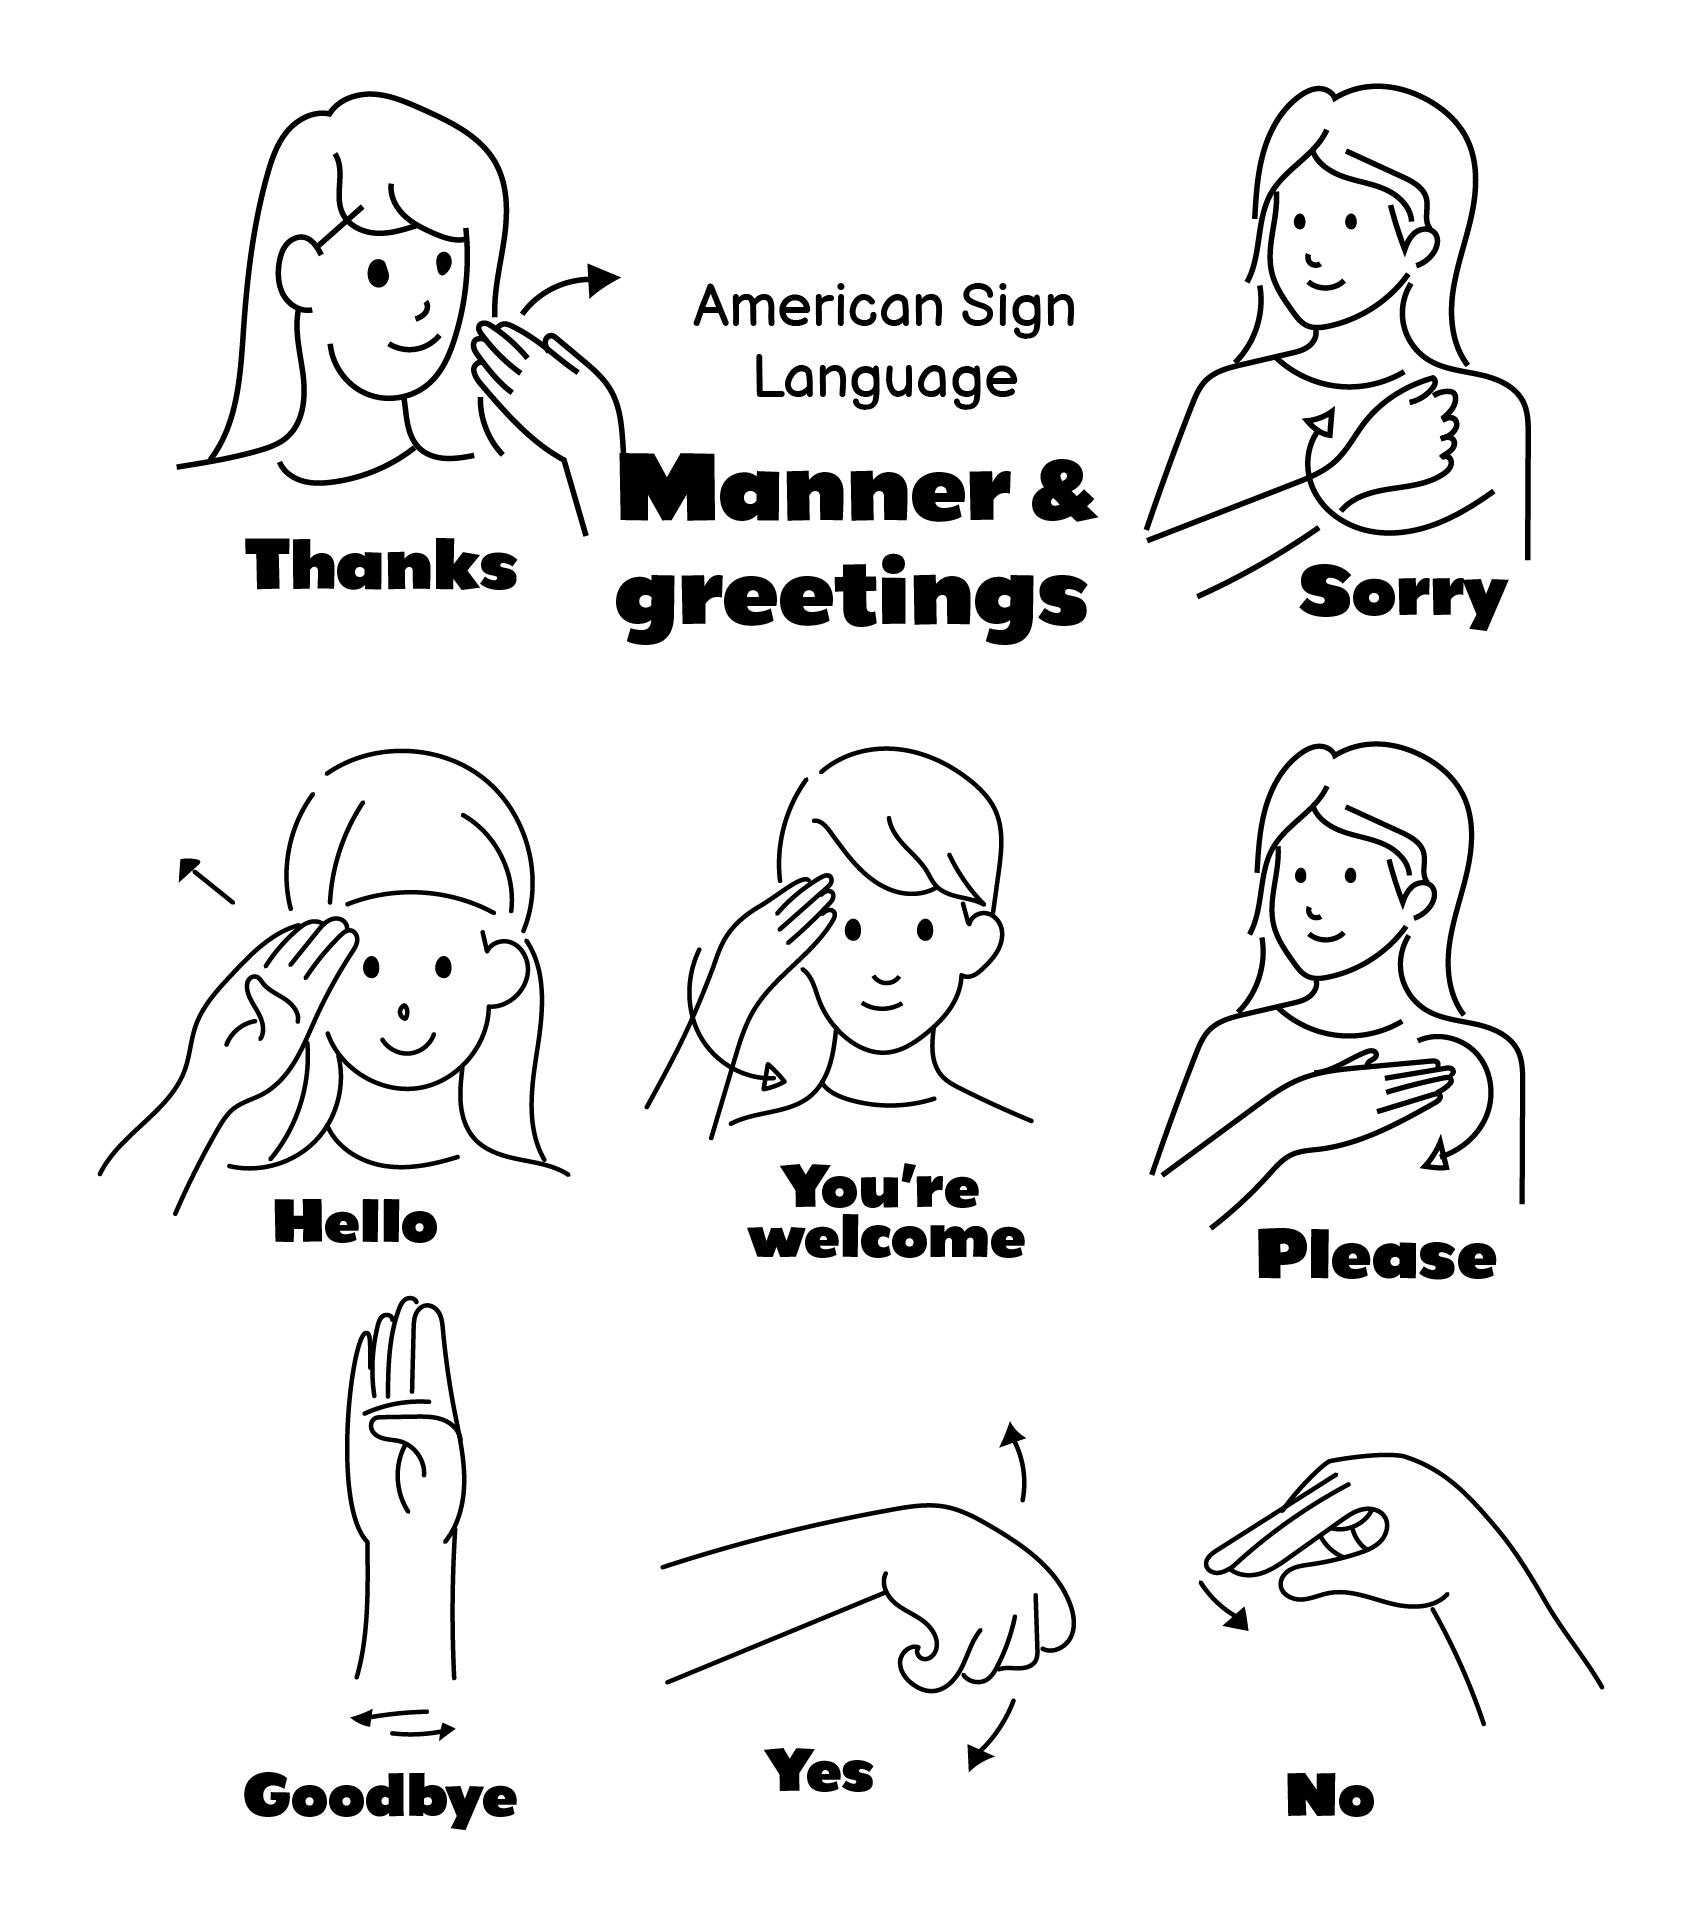 The American Sign Language alphabet chart